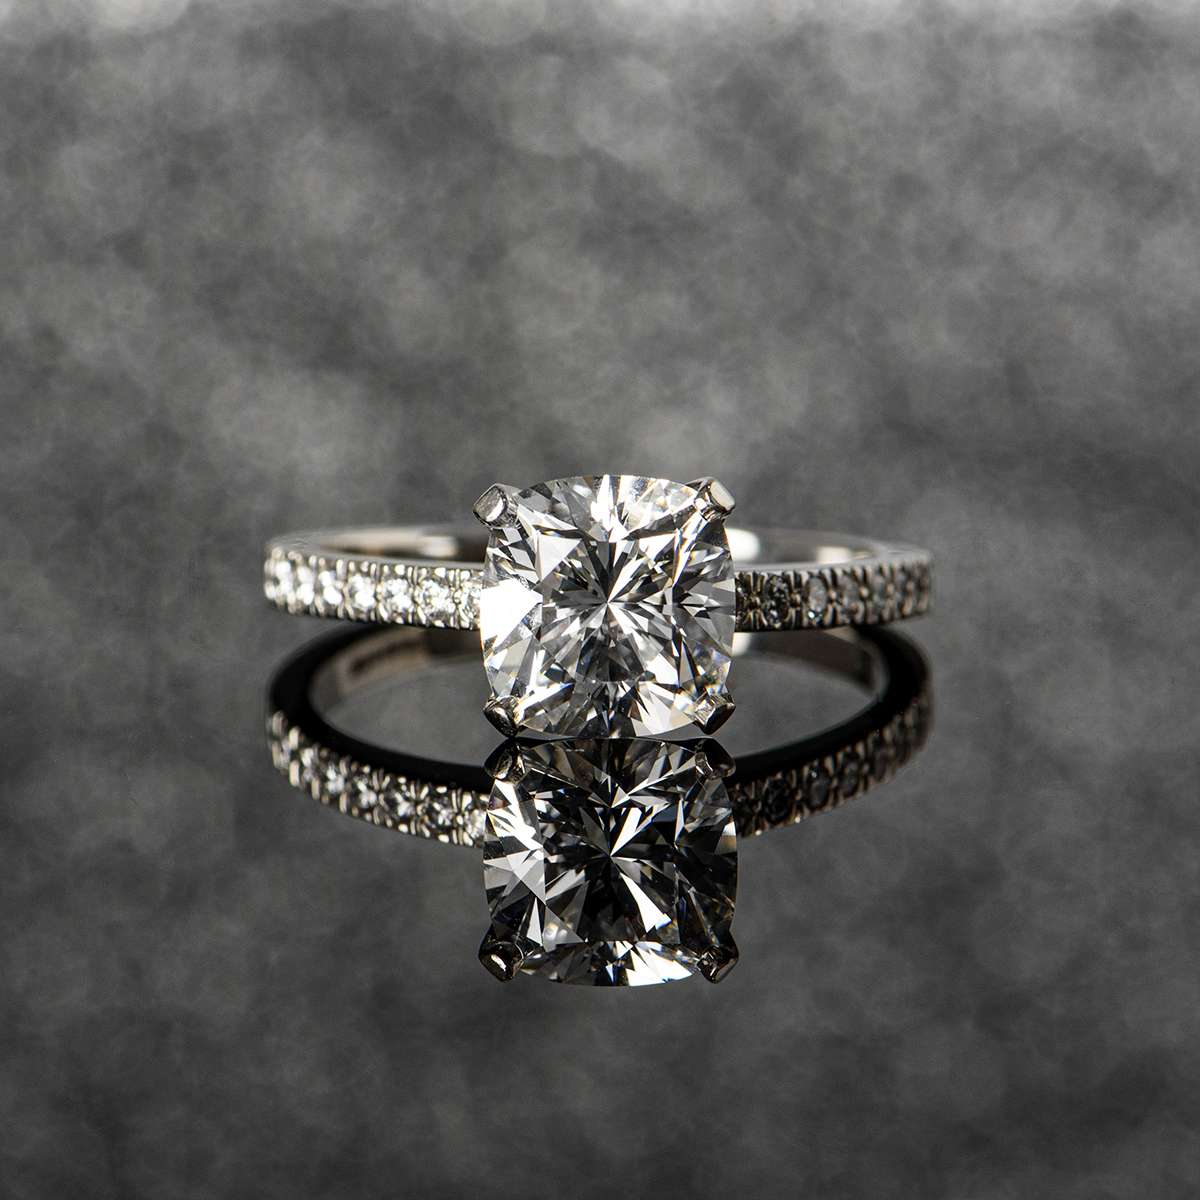 Tiffany & Co. Platinum Cushion Cut Diamond Novo Ring 2.22ct G/VVS1